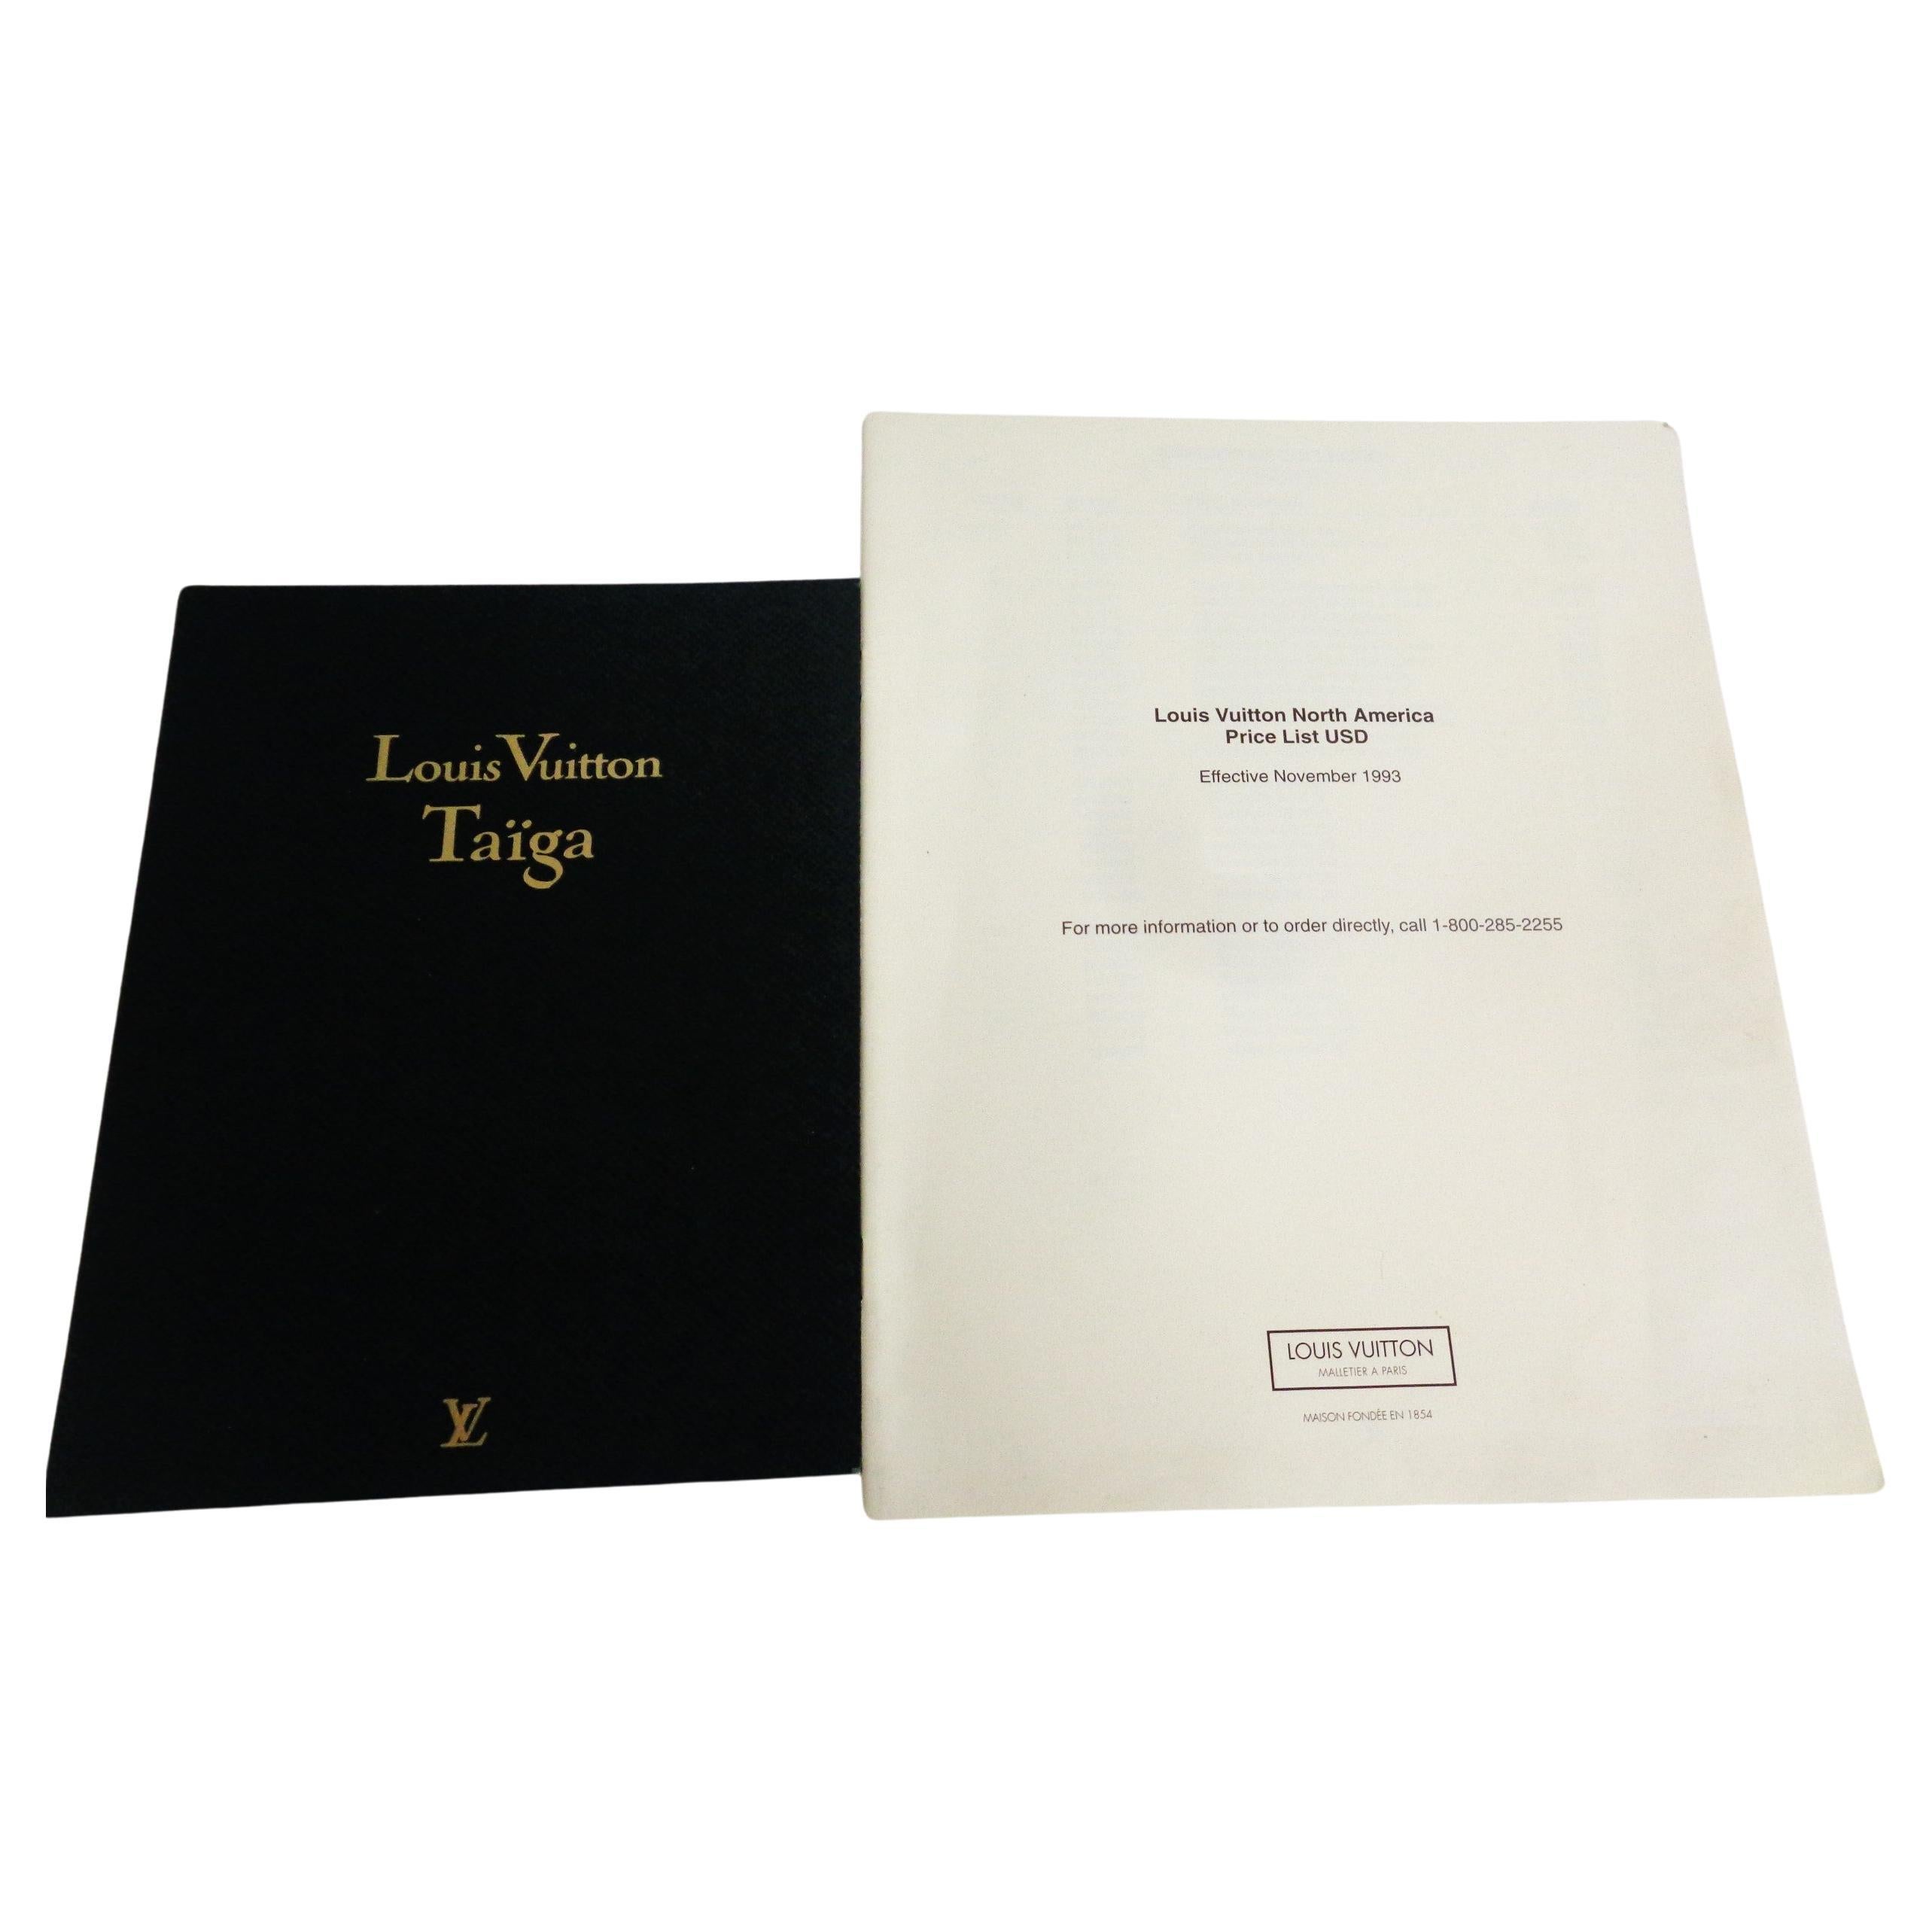 Le catalogue - Louis Vuitton w/ Price List & Taiga Pamphlet - 1993 Number 1  For Sale 8